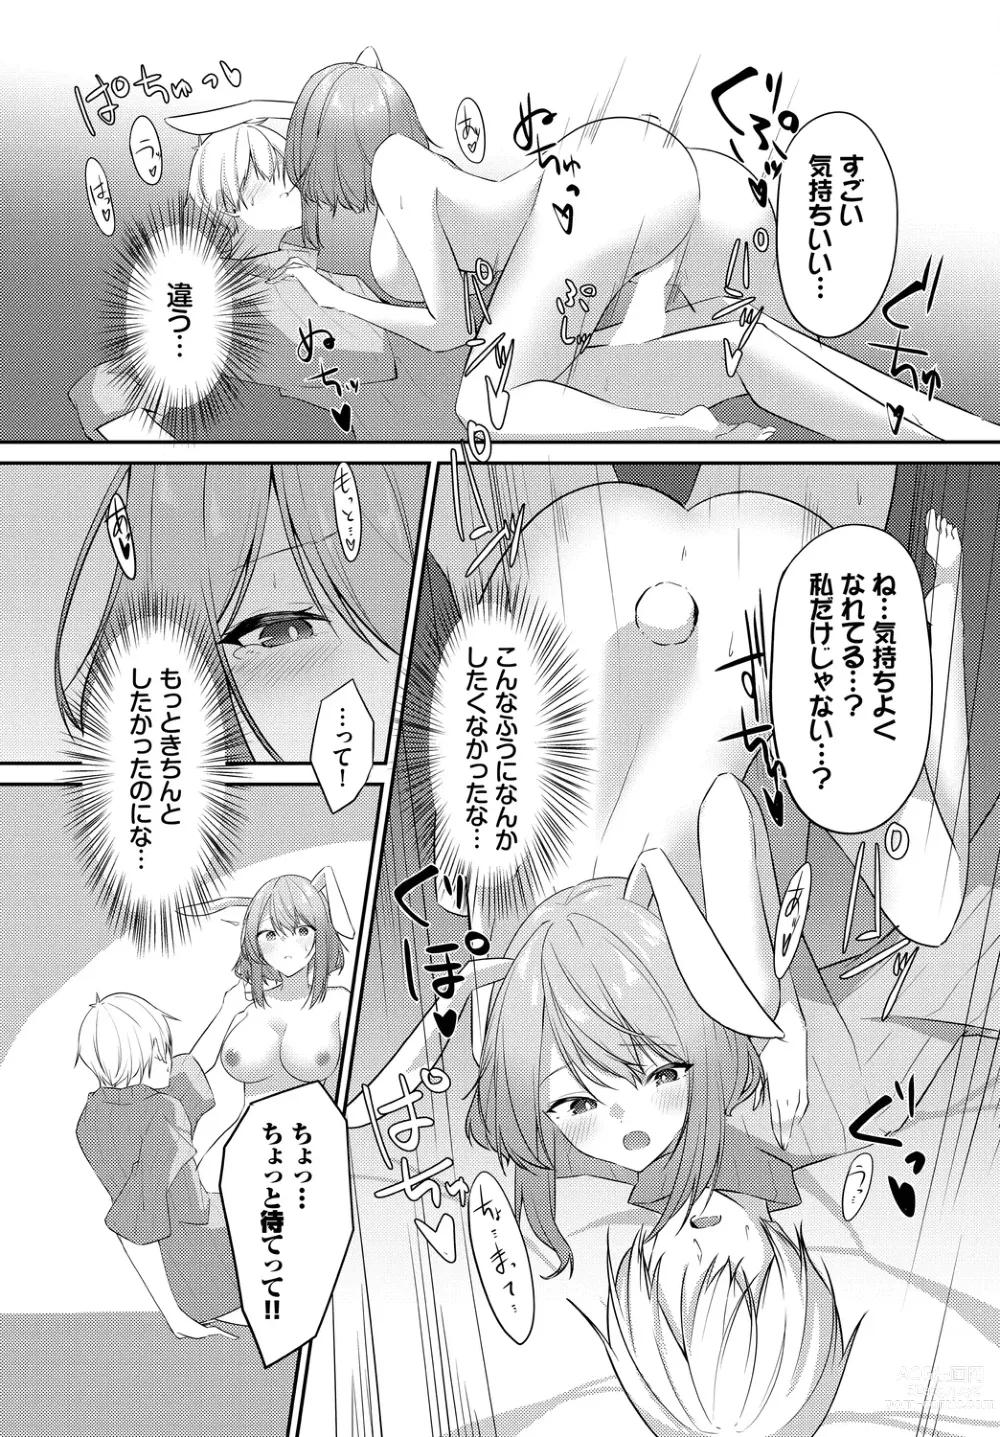 Page 155 of manga Meikyuu Lilac - Laberynth Lilac.